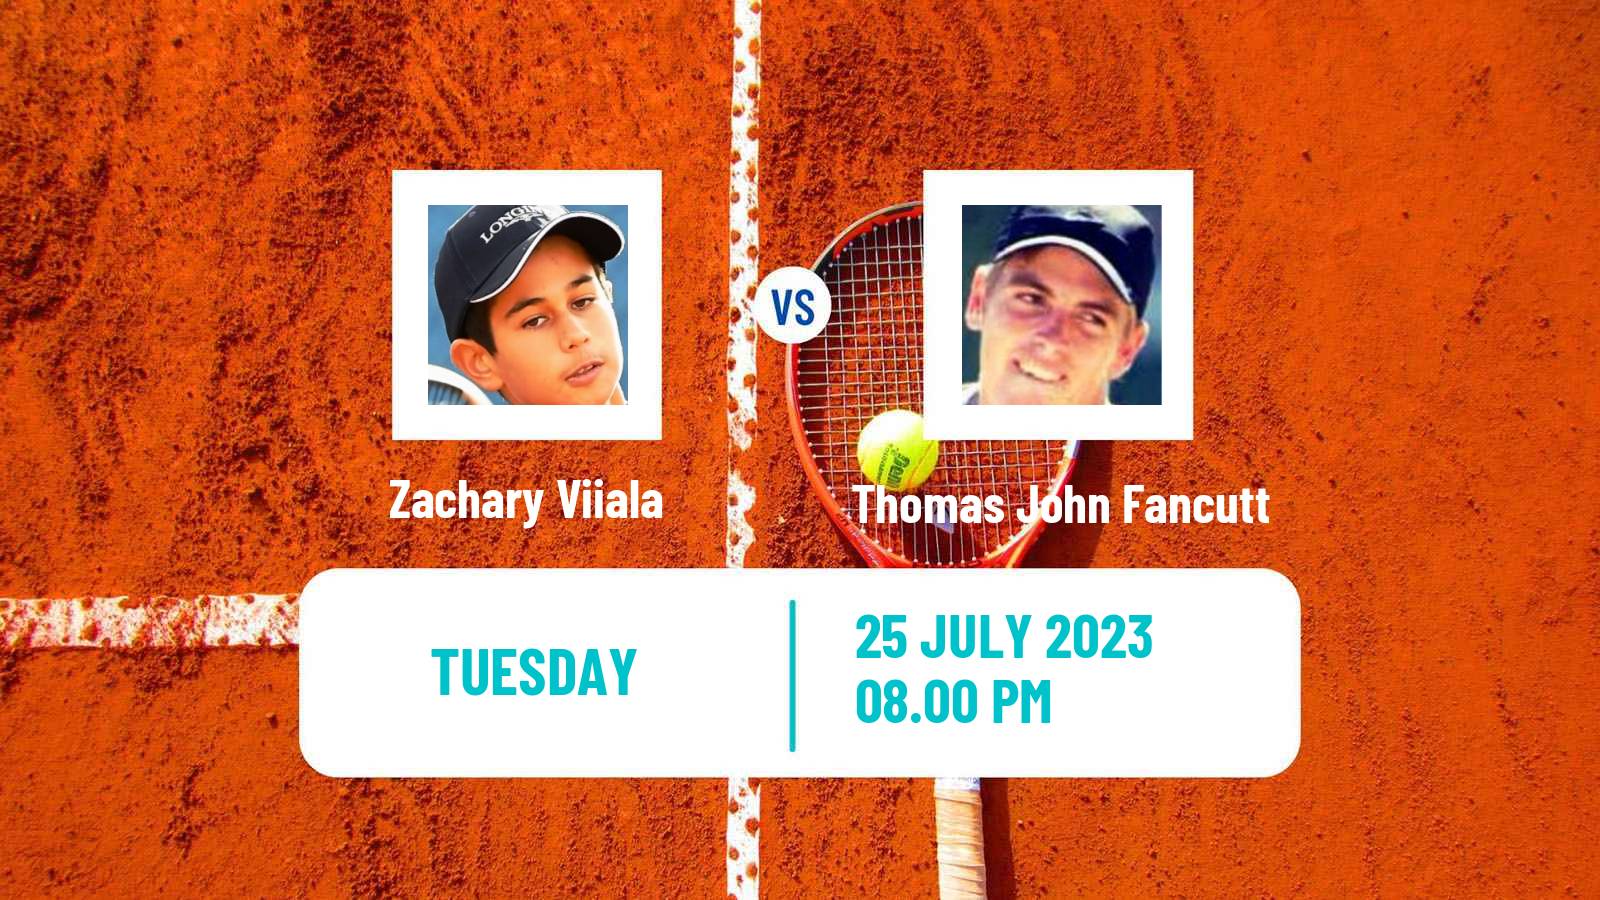 Tennis ITF M15 Caloundra Men Zachary Viiala - Thomas John Fancutt